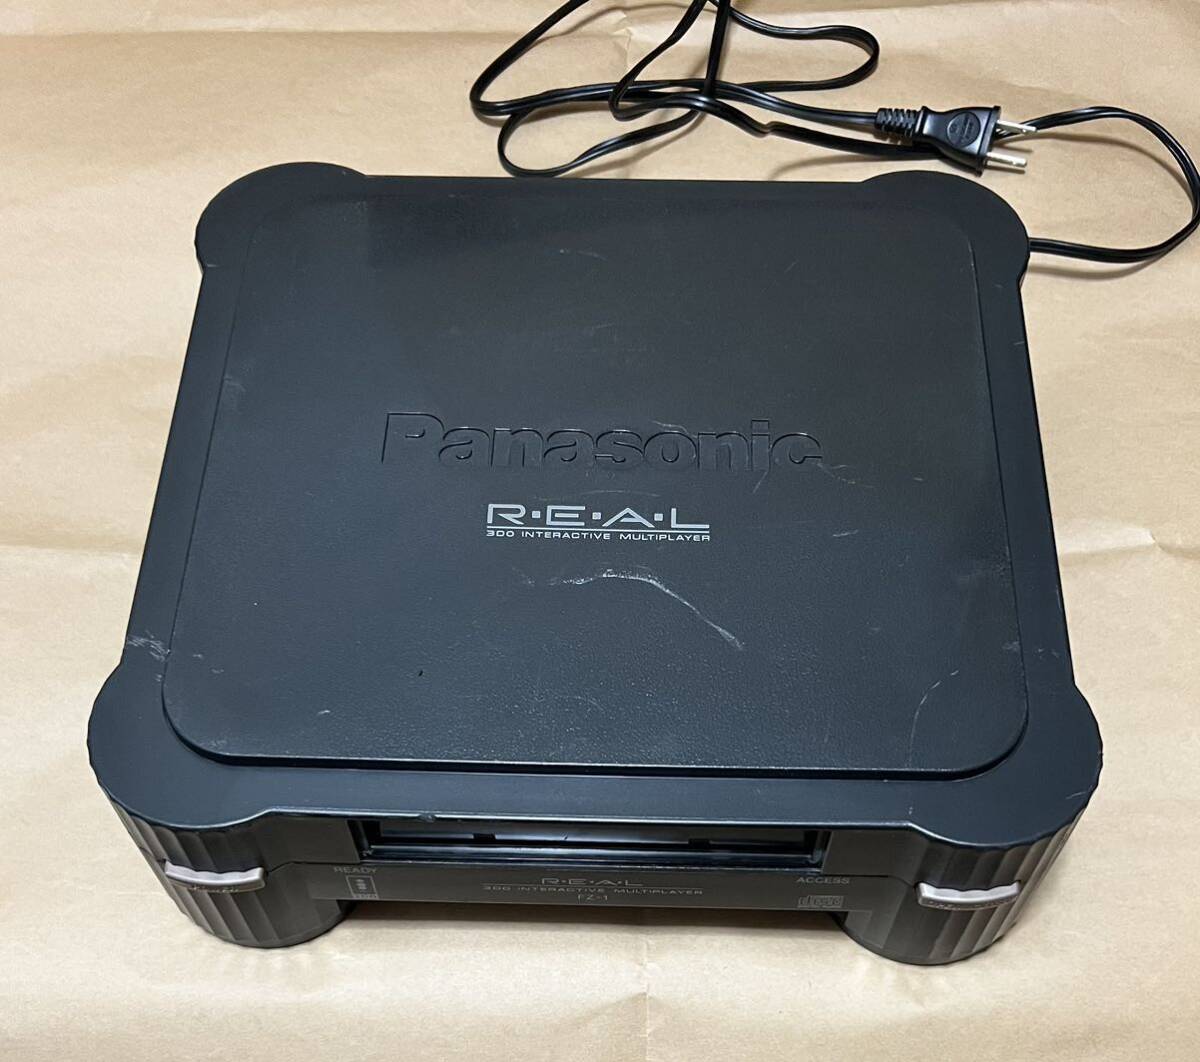 Panasonic 3DO body Panasonic Panasonic 3DO inter laktib multi player body 